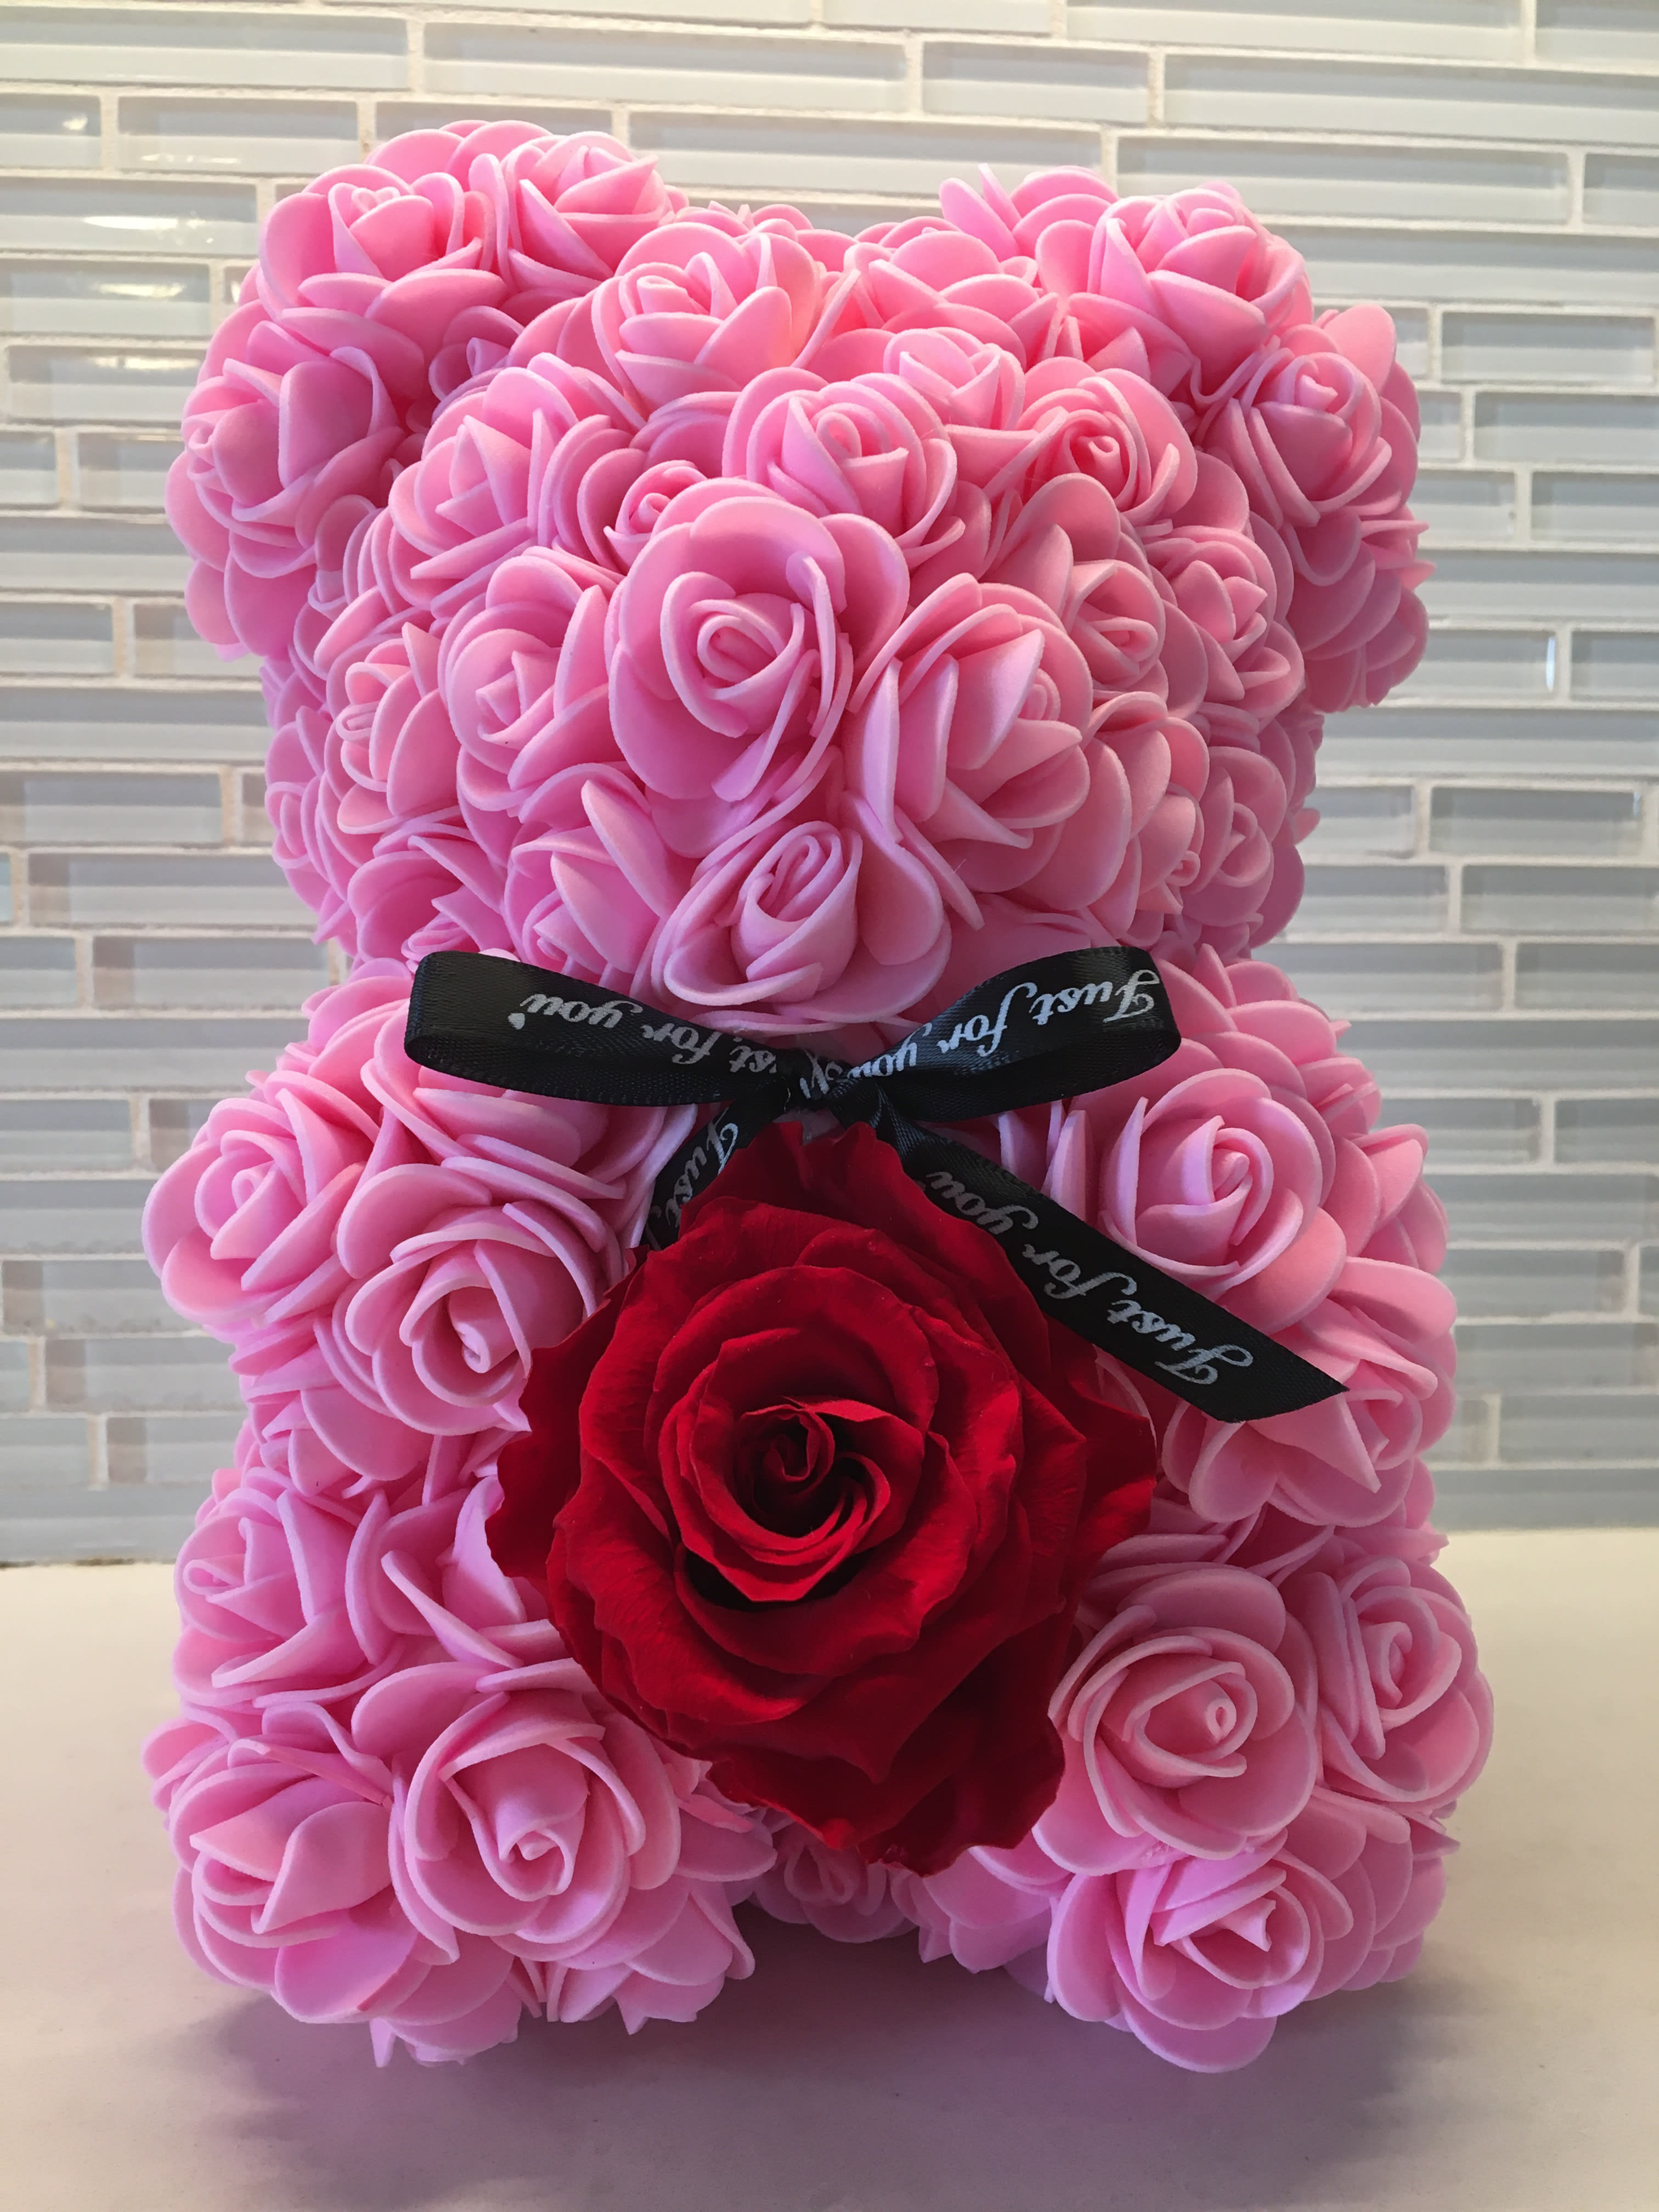 rose made teddy bear